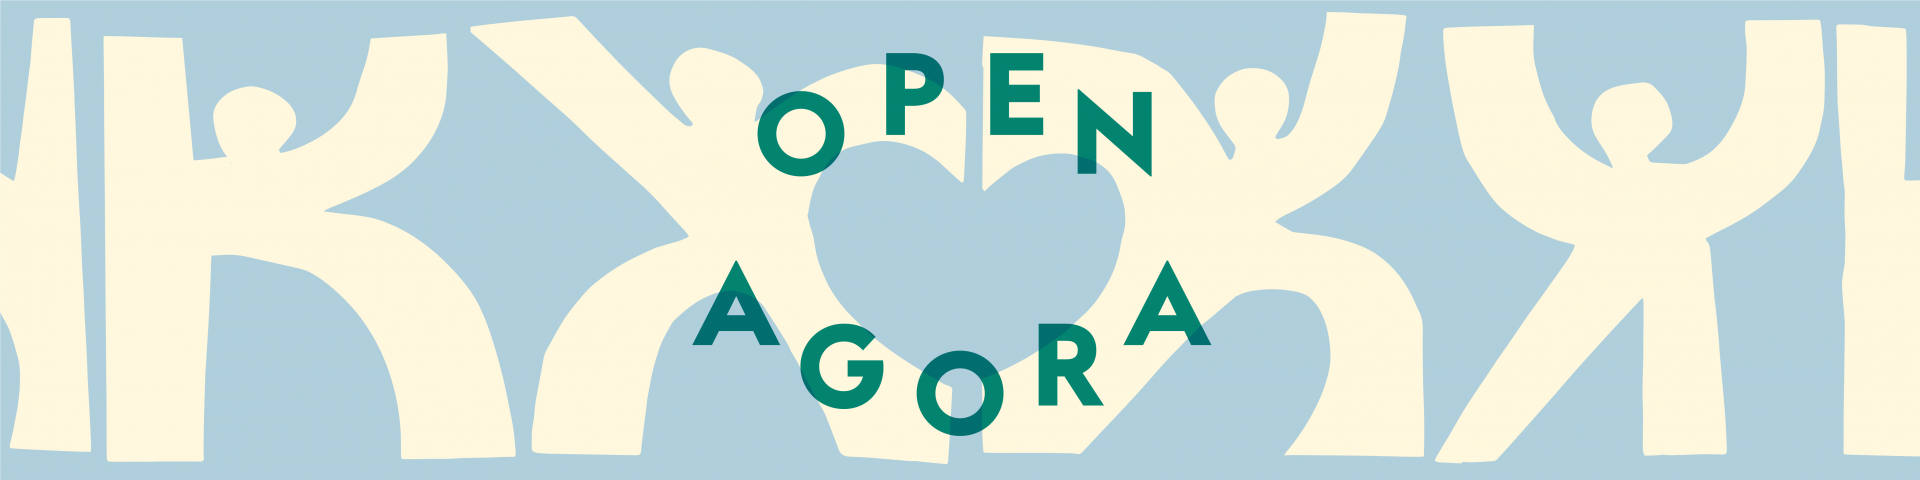 Open Agora: Διήμερο bazaar και παράλληλες δράσεις - Εικόνα